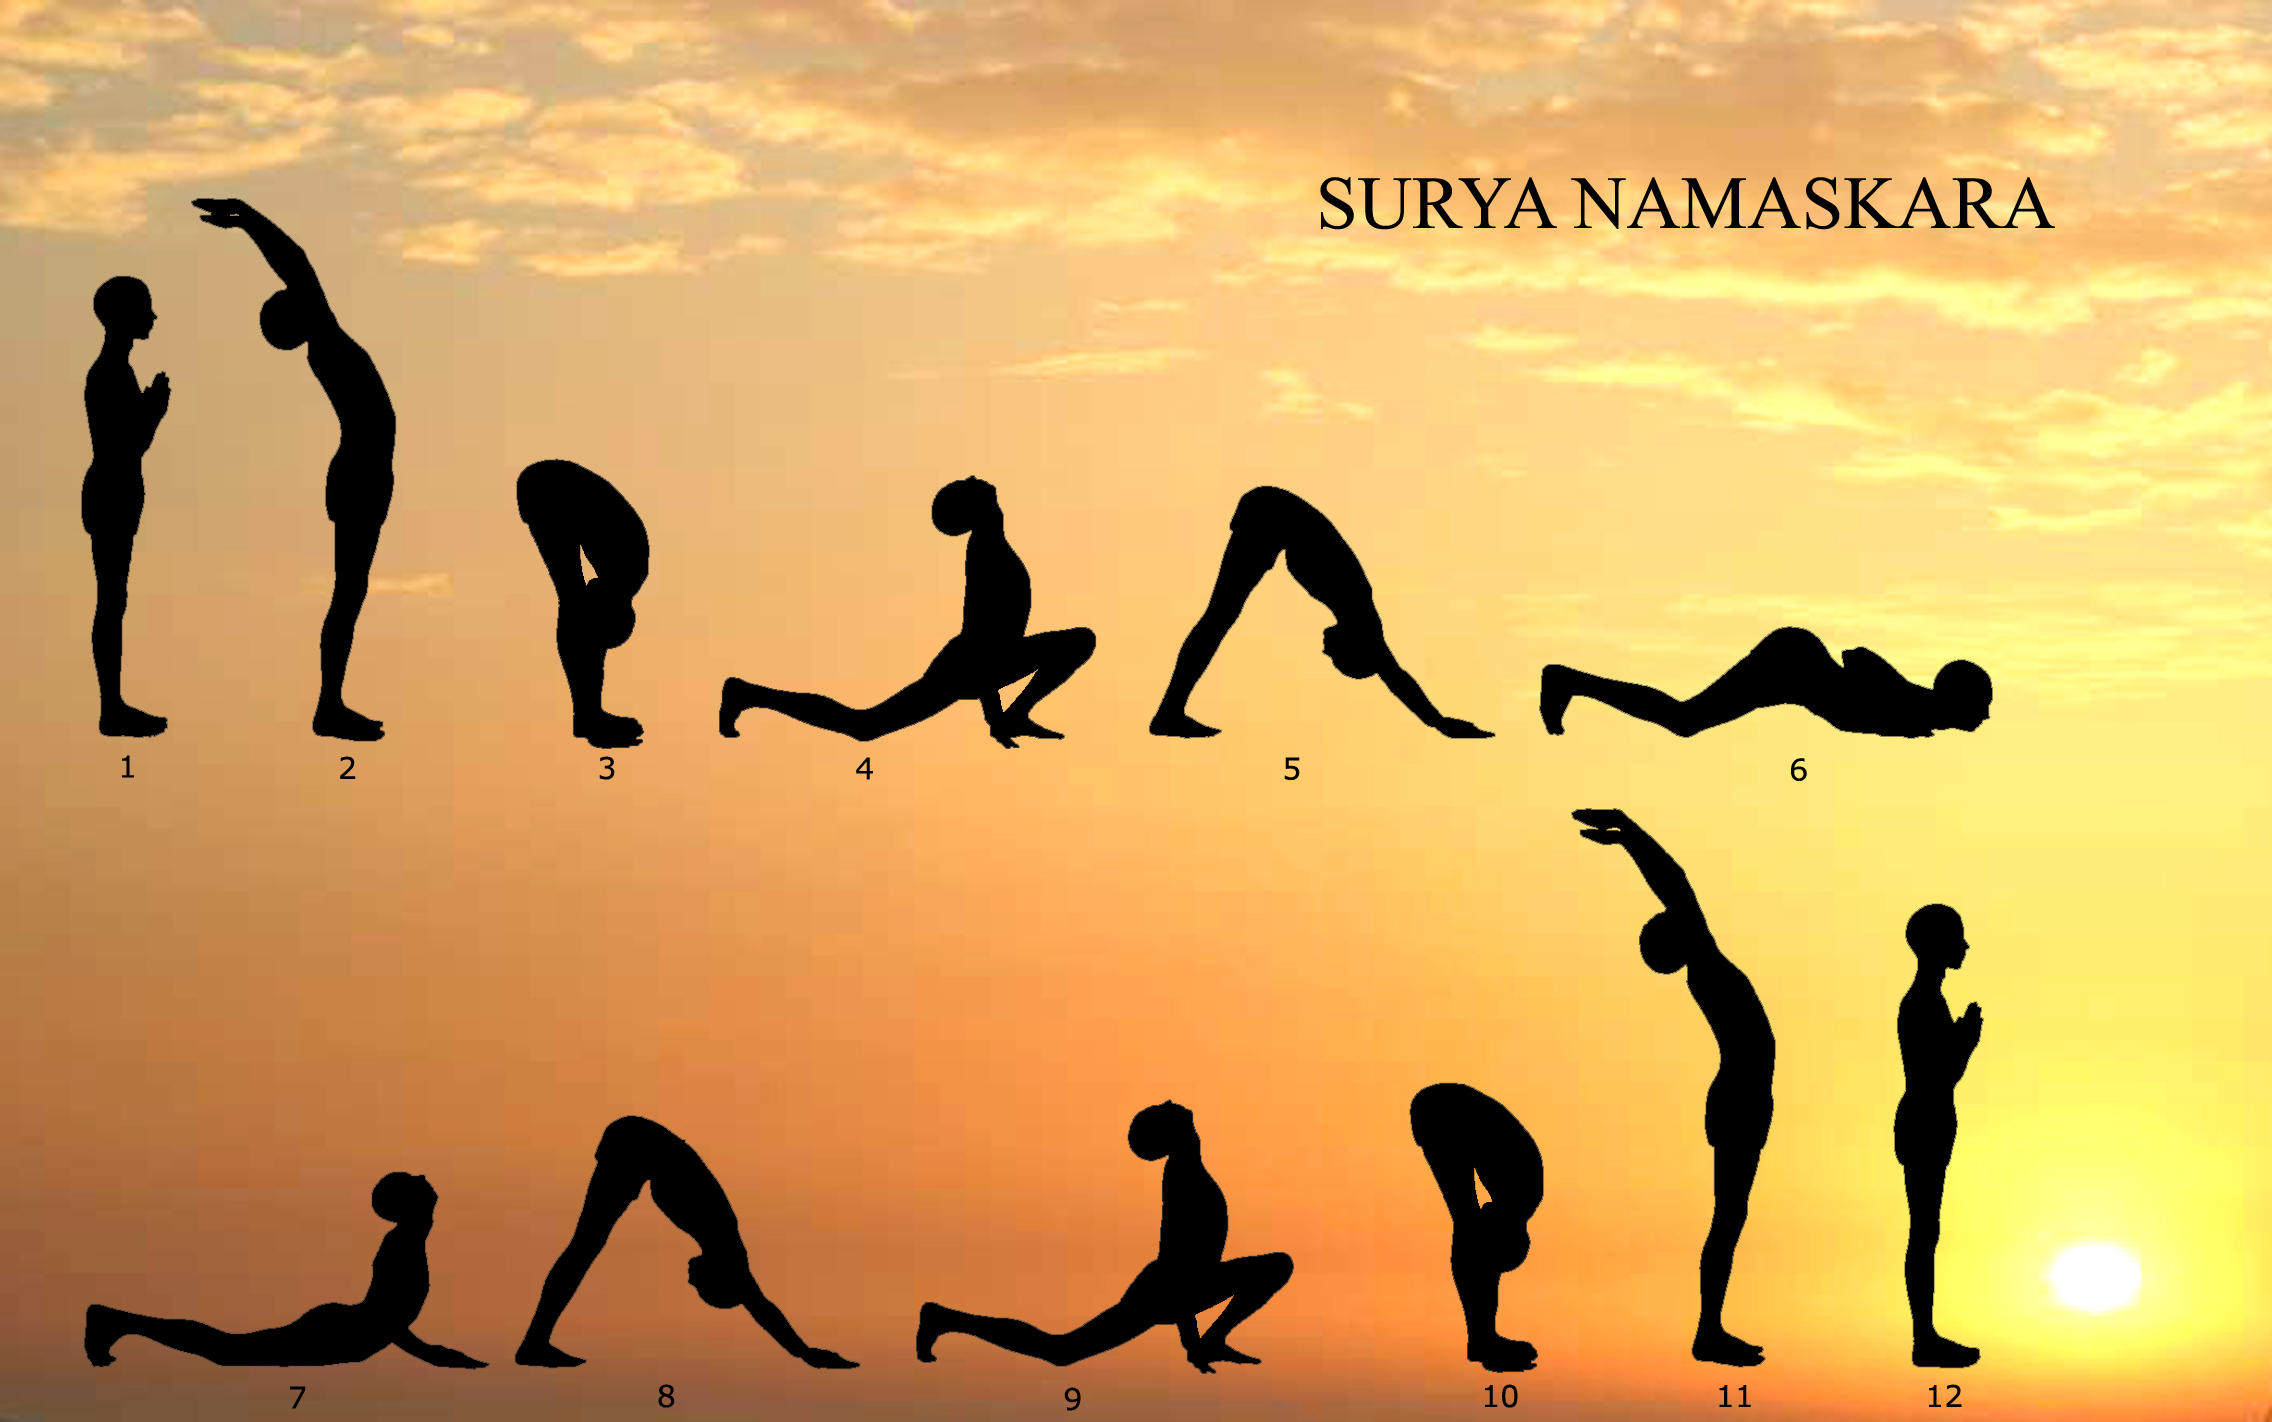 How to Do Knees, Chest, and Chin Pose (Ashtanga Namaskara) in Yoga